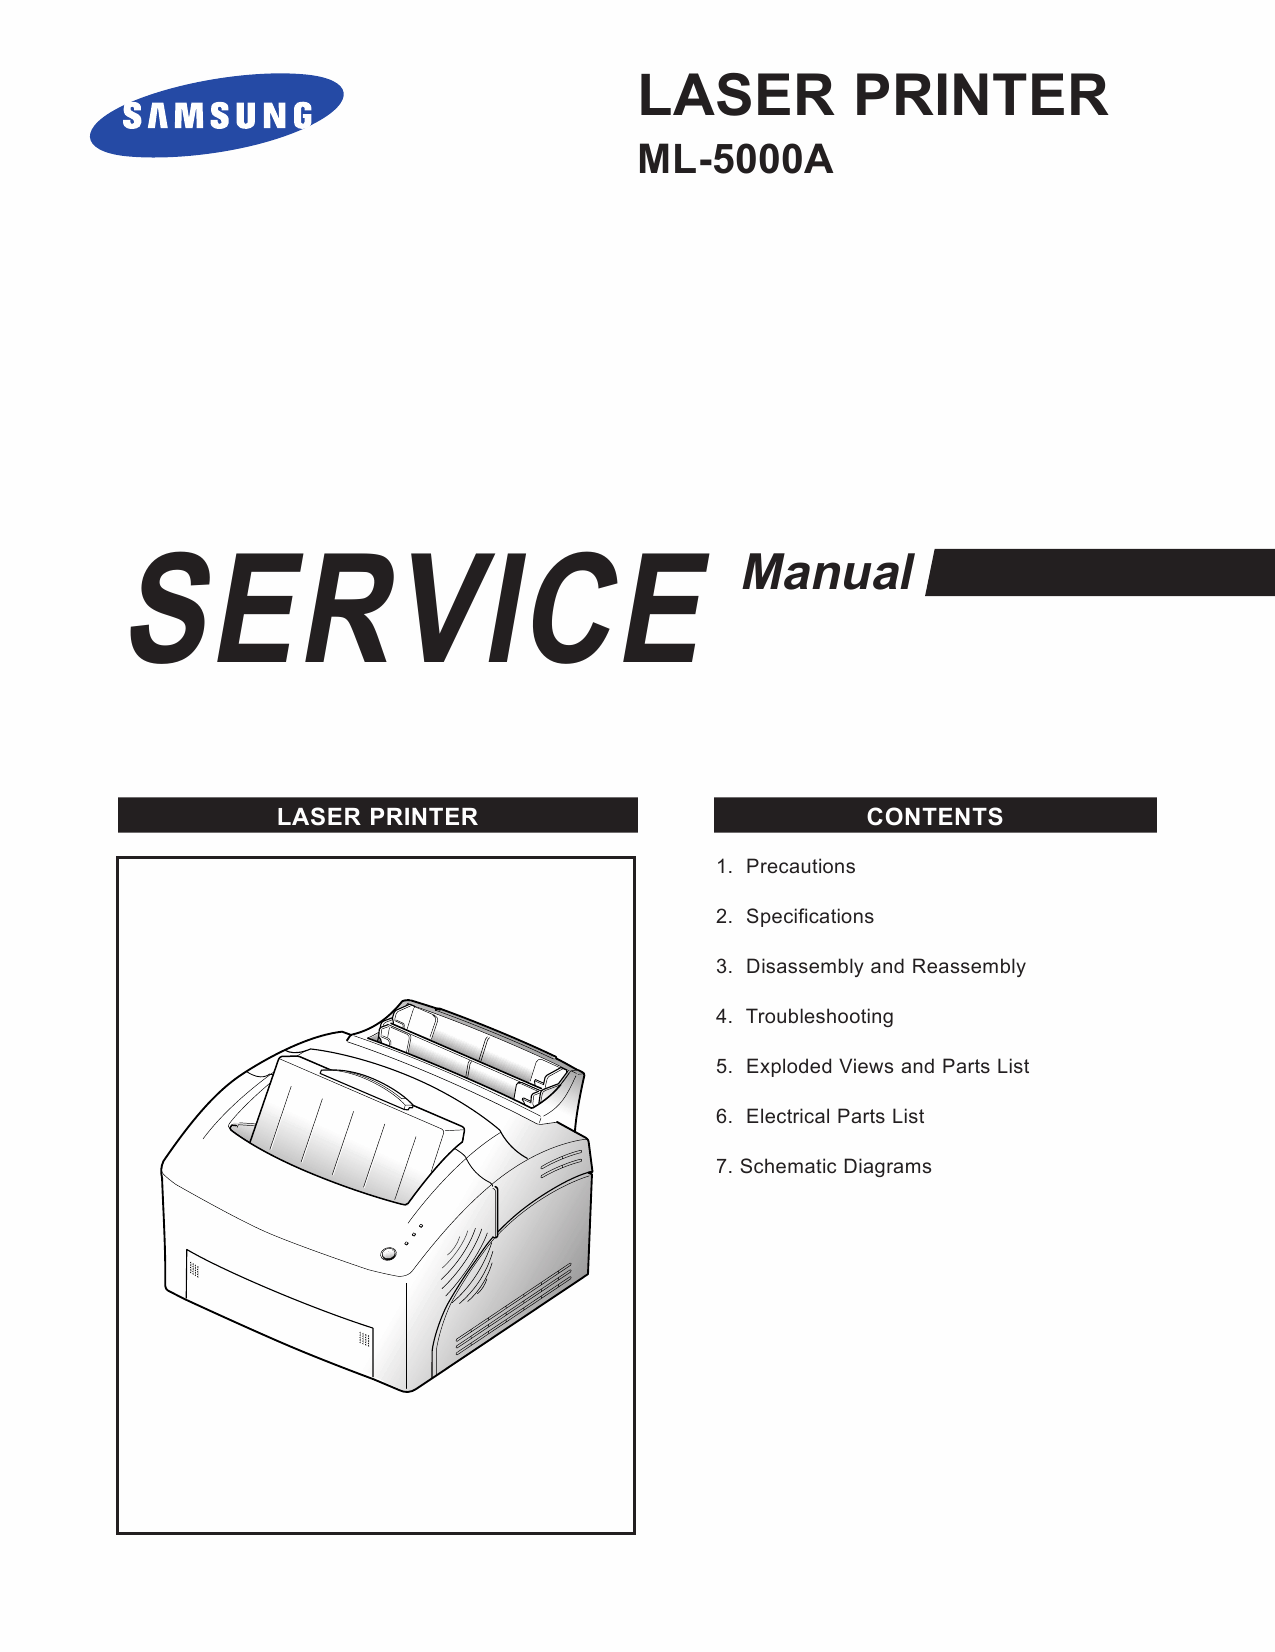 Samsung Laser-Printer ML-5000A Parts and Service Manual-1